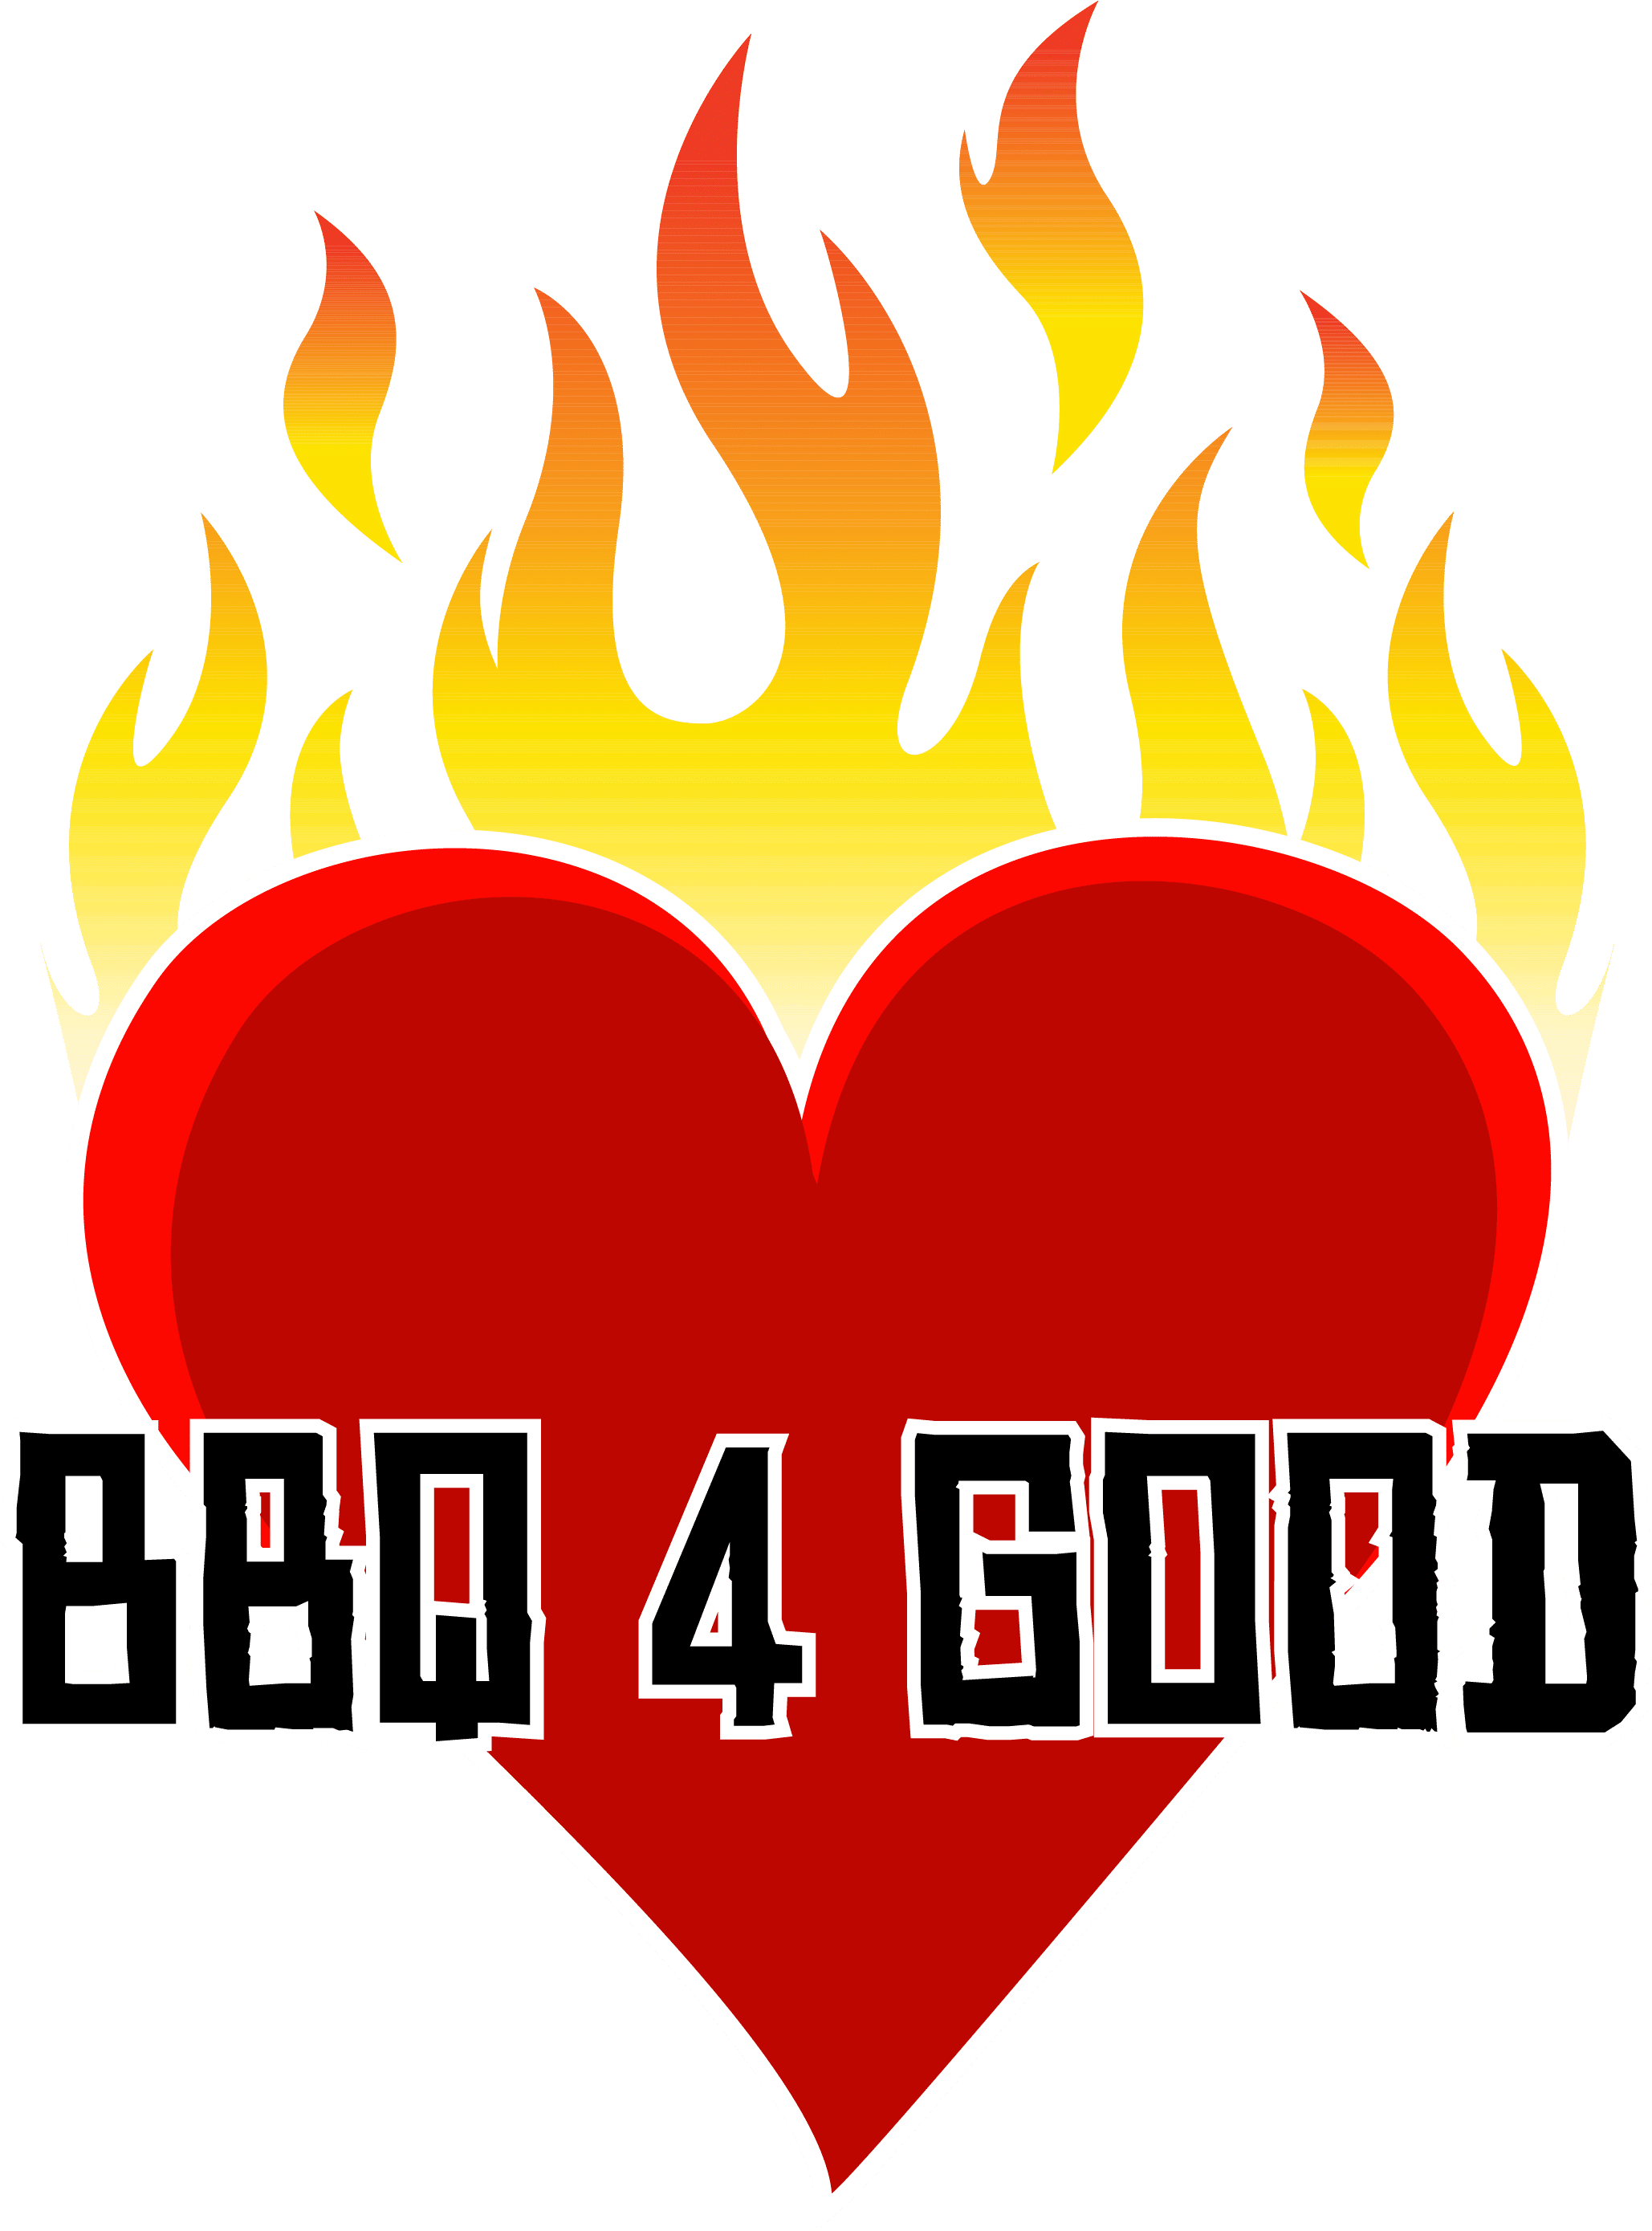 BBQ 4 Good logo